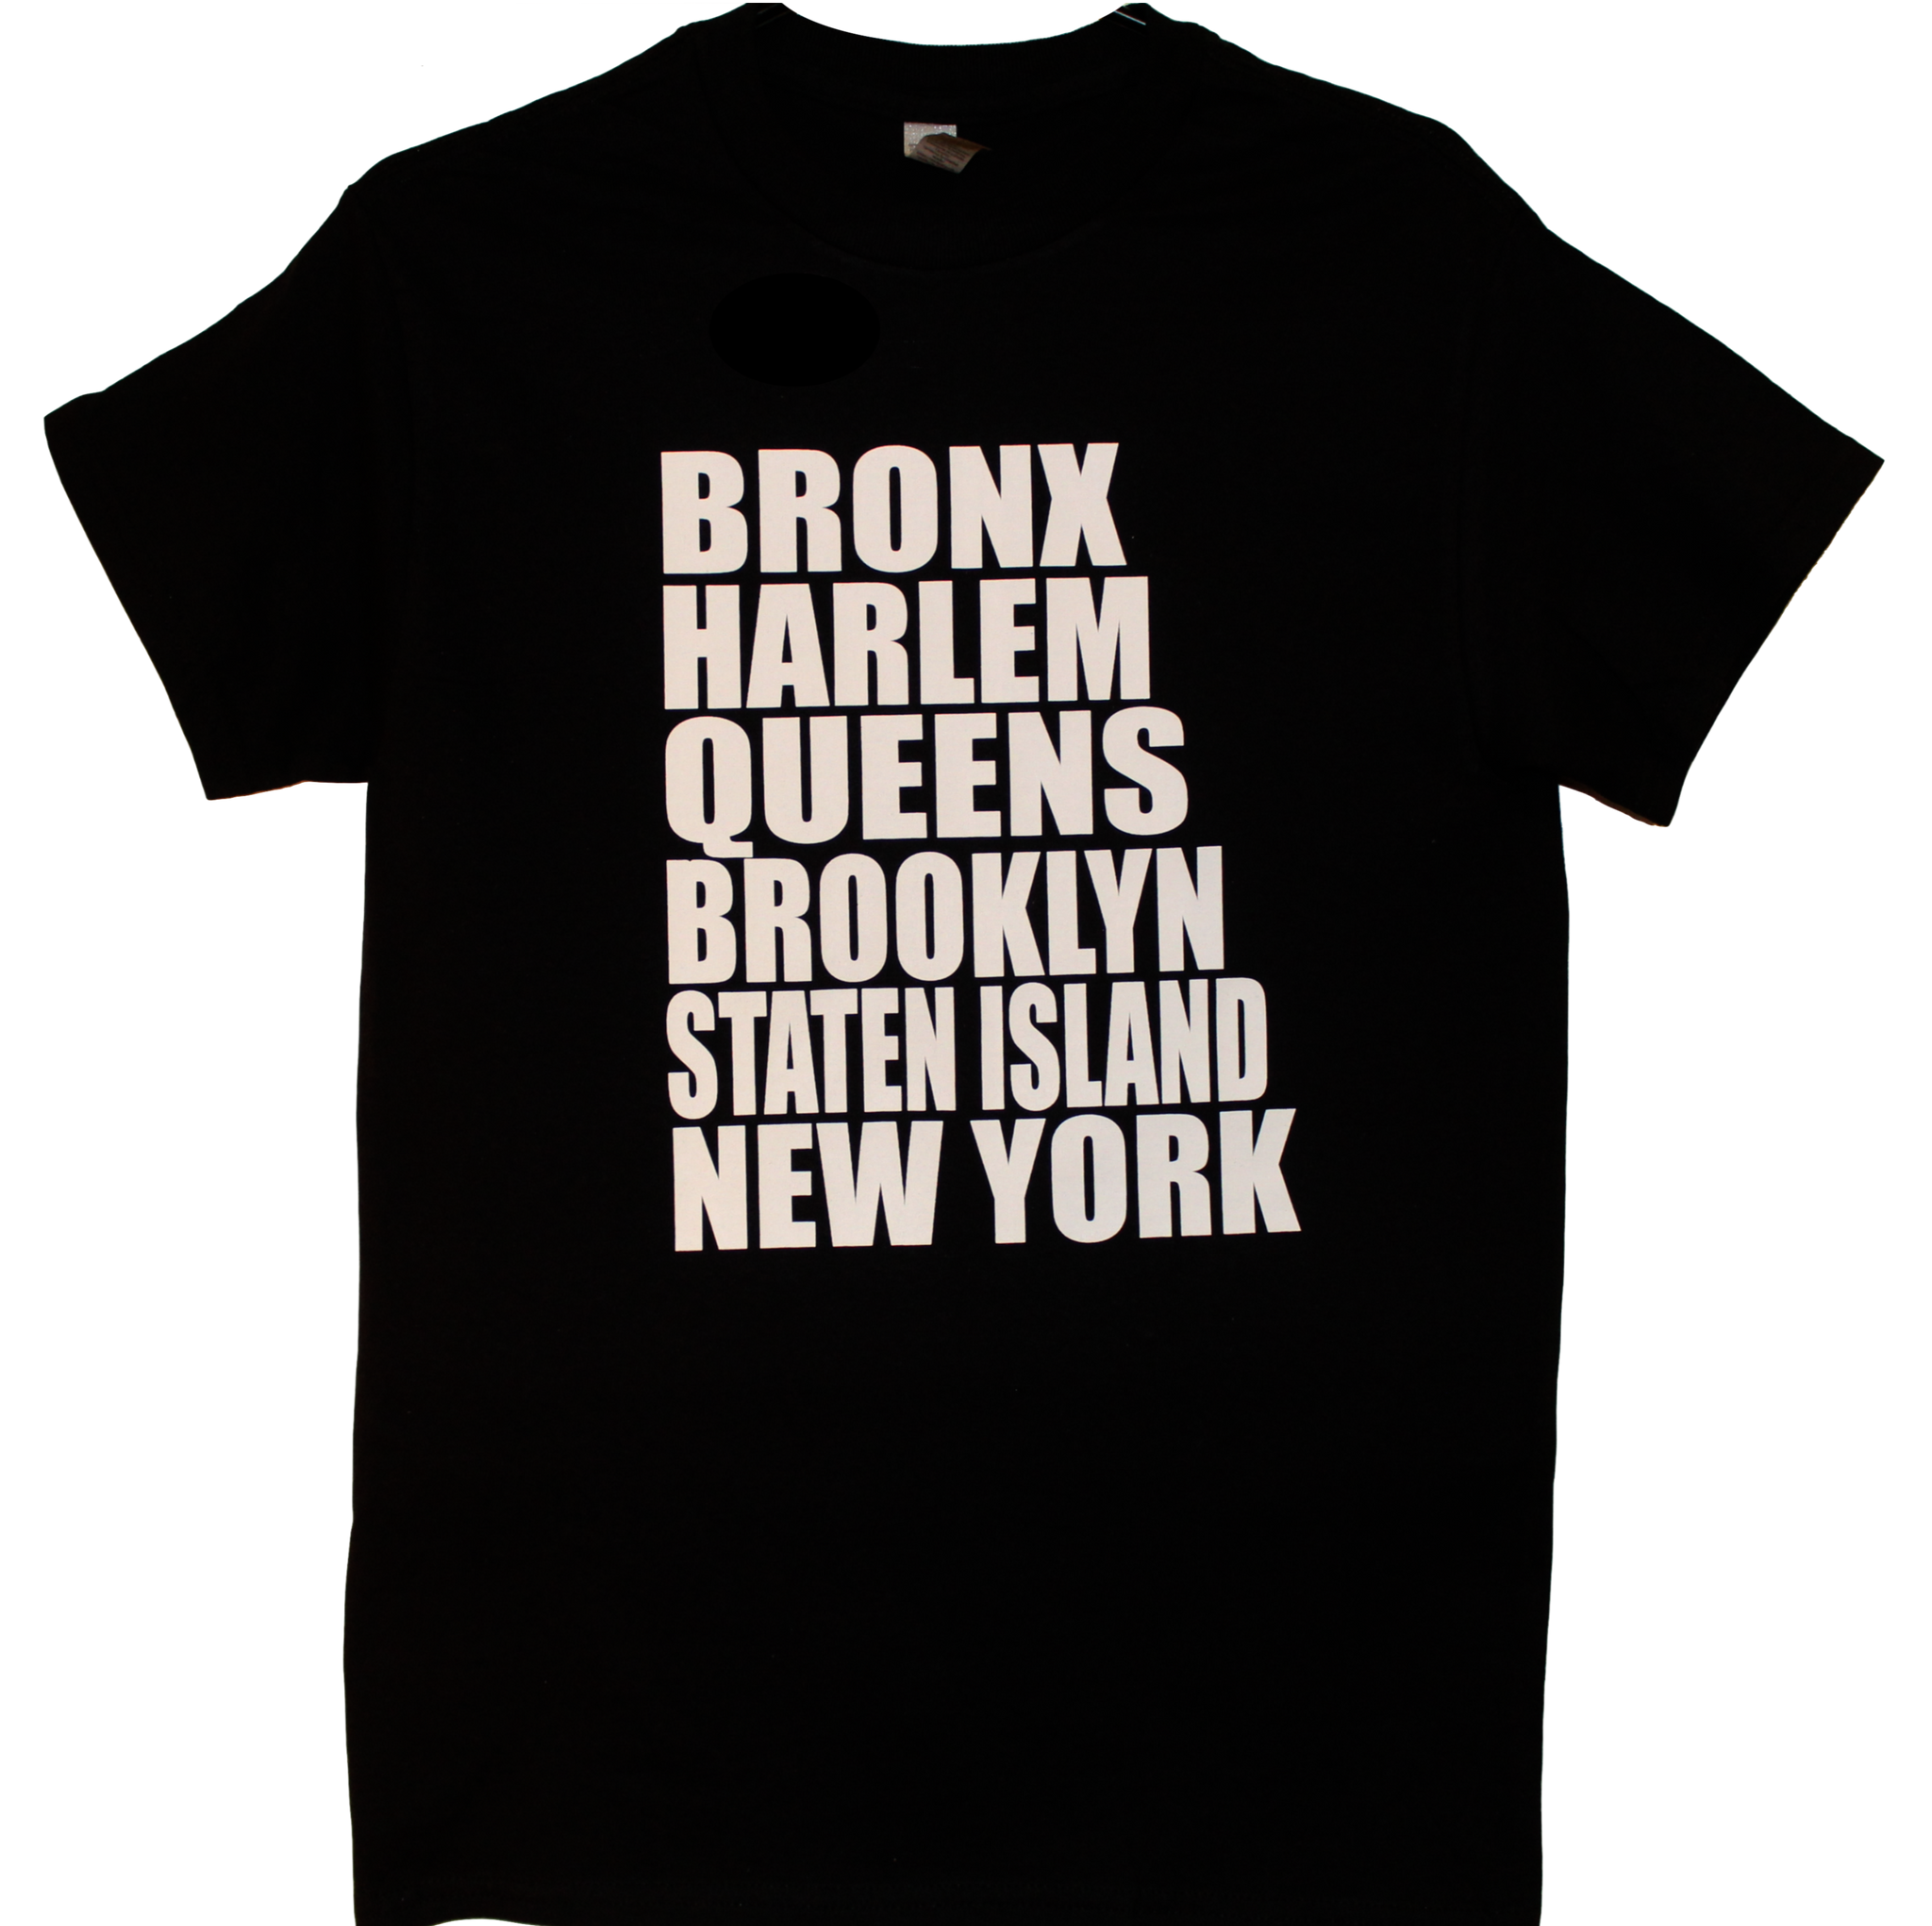 NYC five boroughs t-shirt